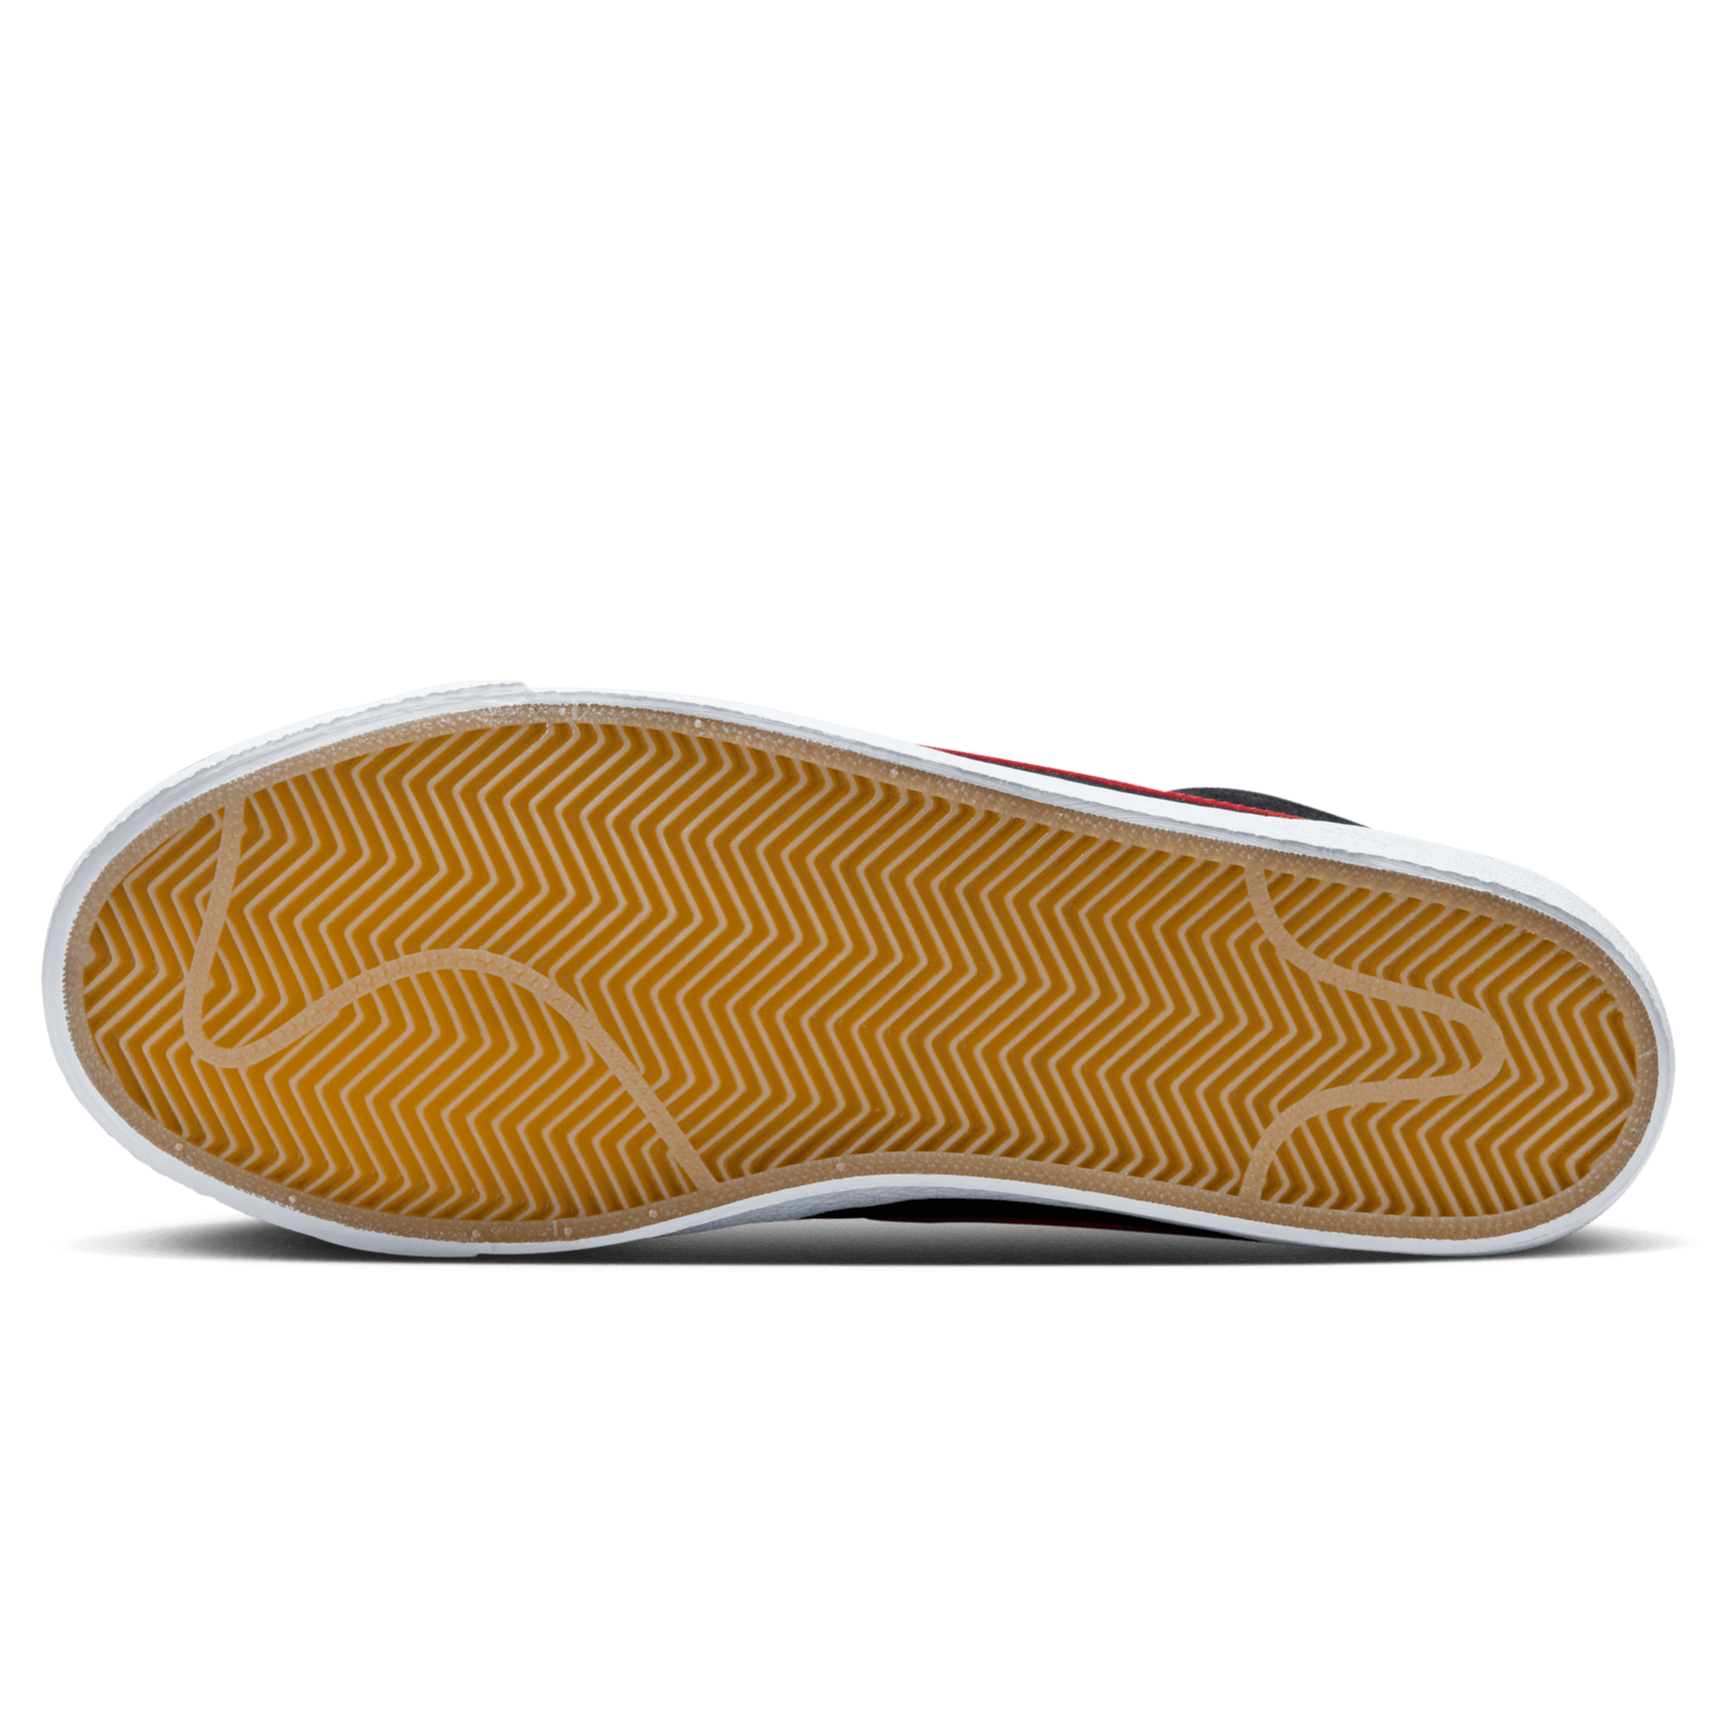 Black/Red Blazer Mid Nike SB Skate Shoe Bottom